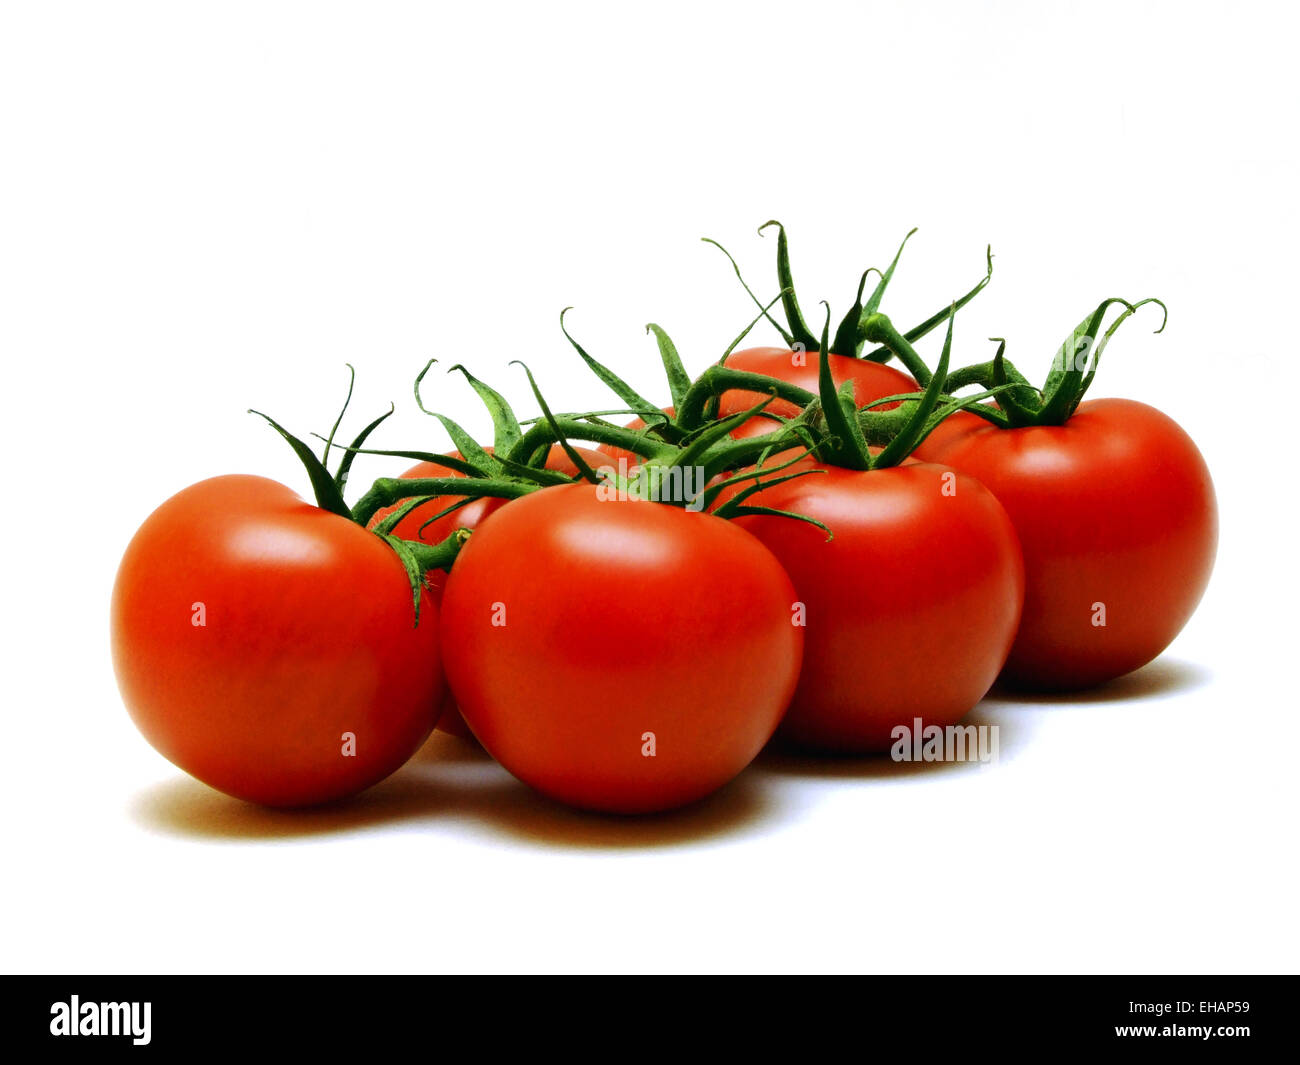 Tomaten / tomatoes Stock Photo